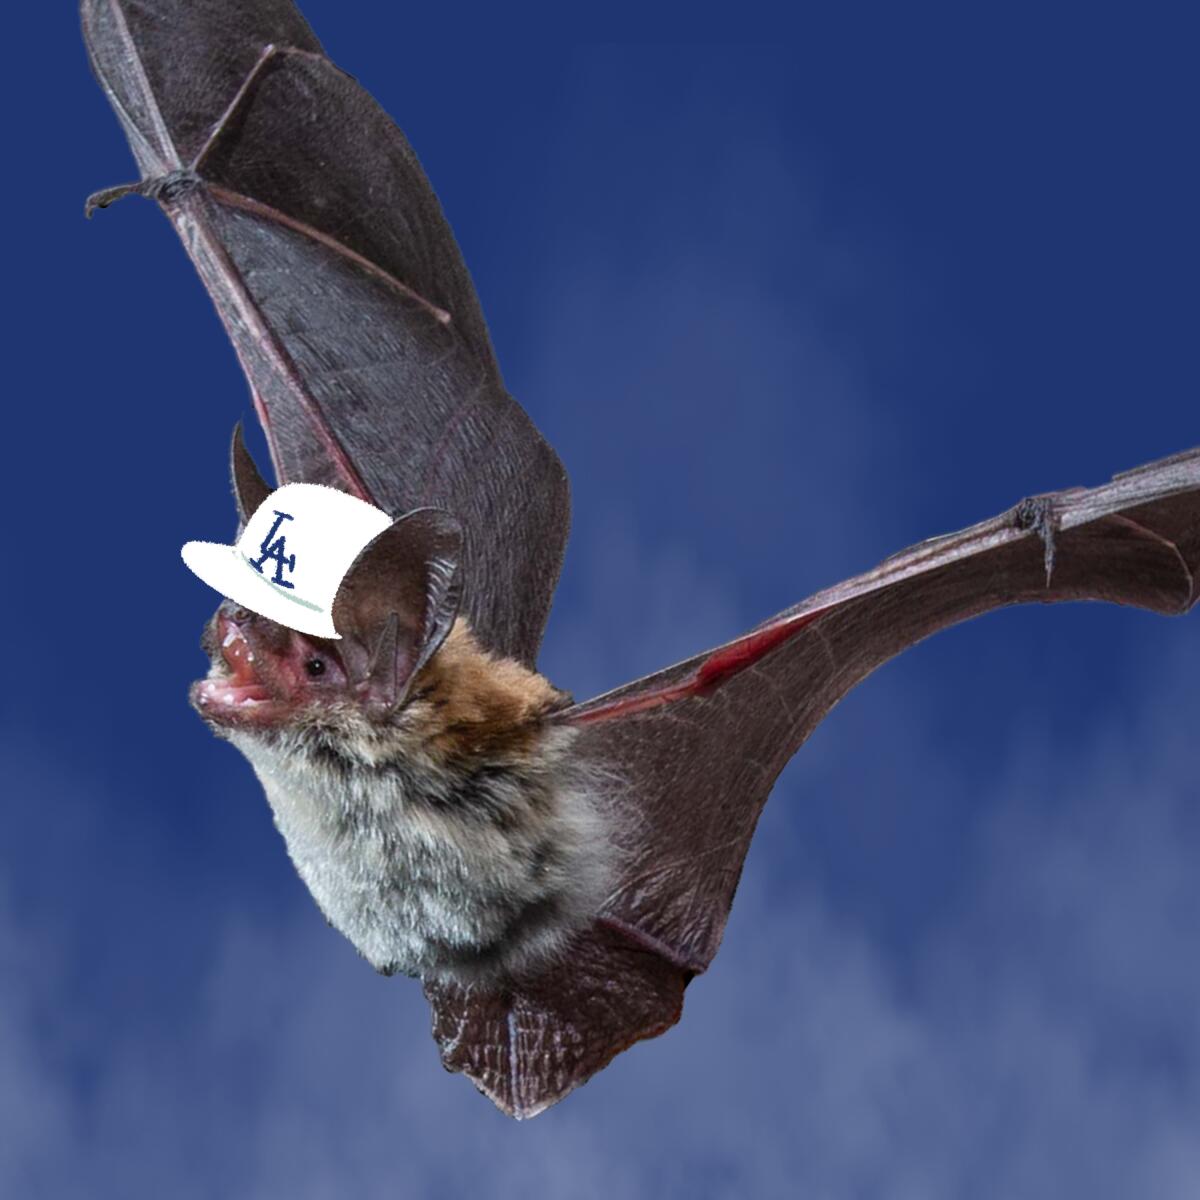 Bats in inner-city L.A.